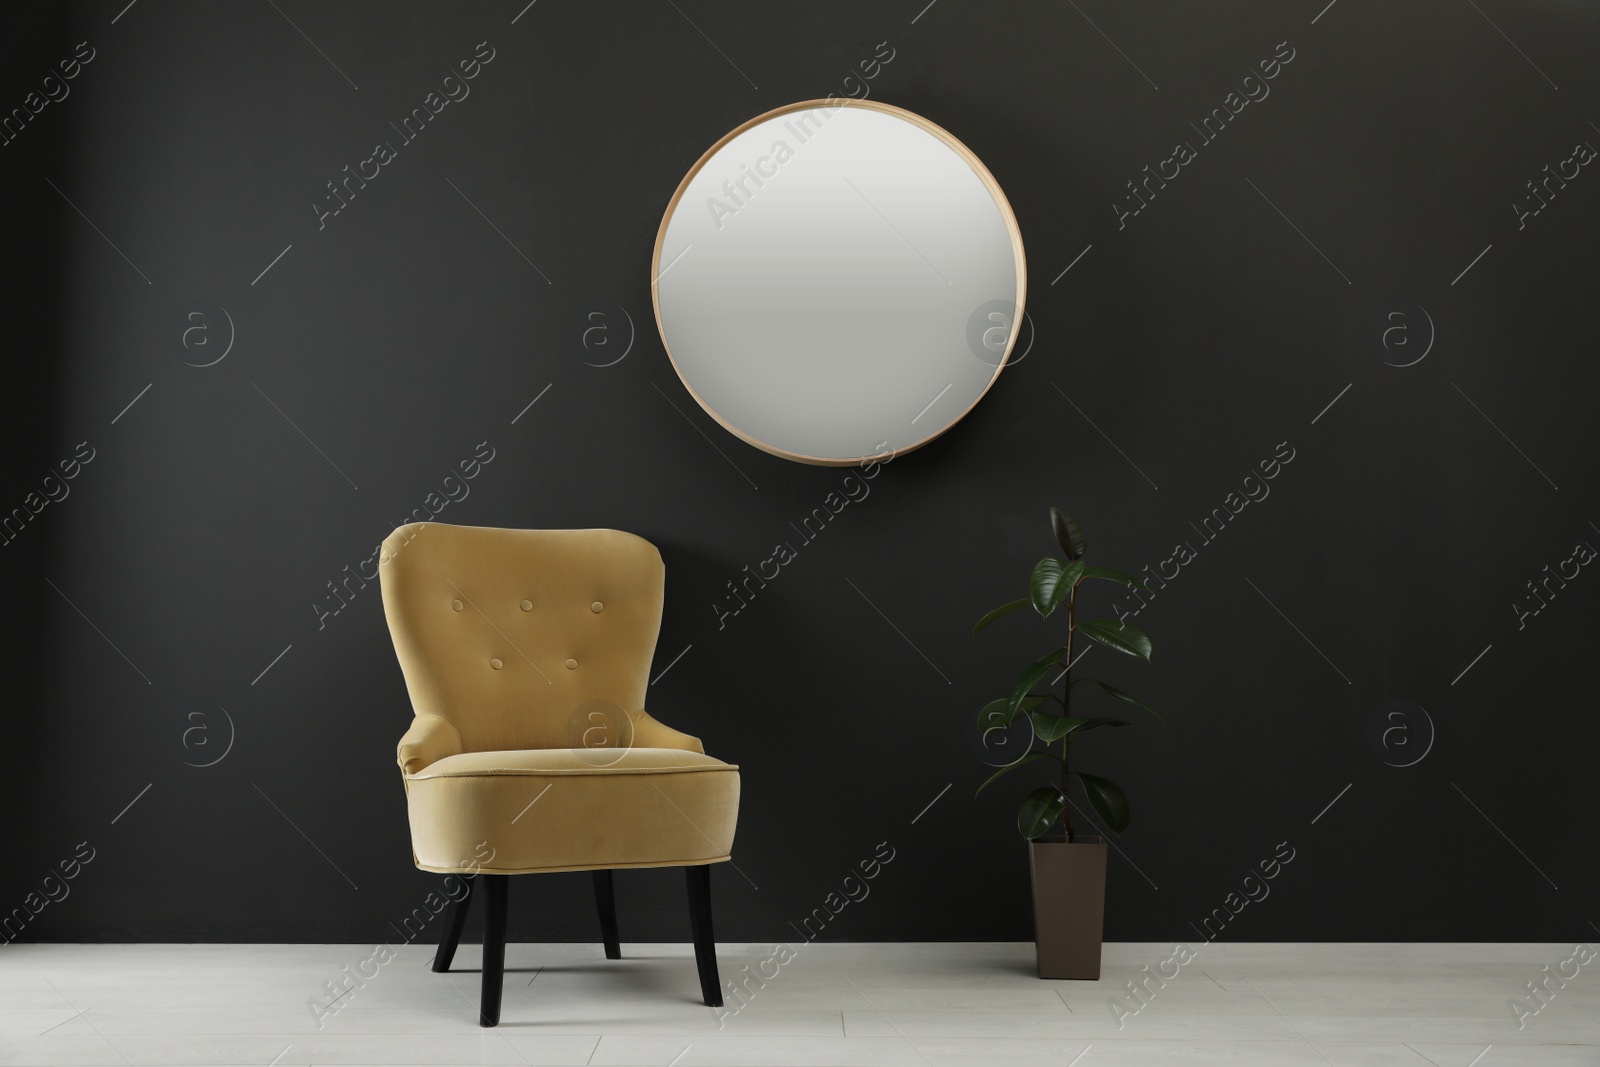 Photo of Stylish armchair and houseplant near black wall. Interior design